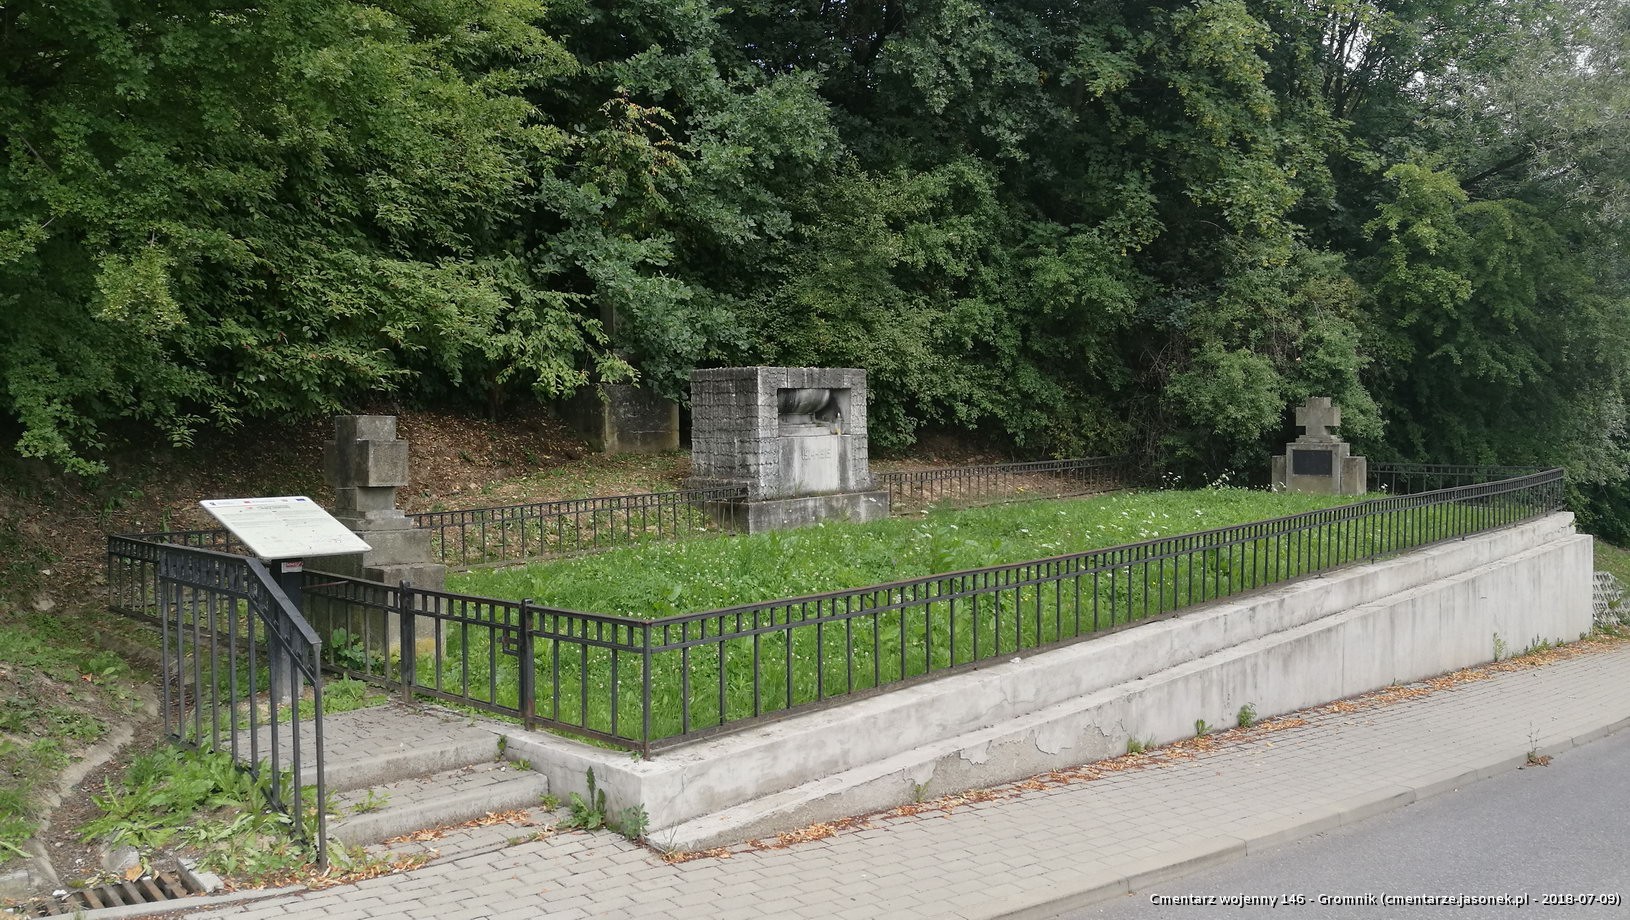 Cmentarz wojenny 146 - Gromnik